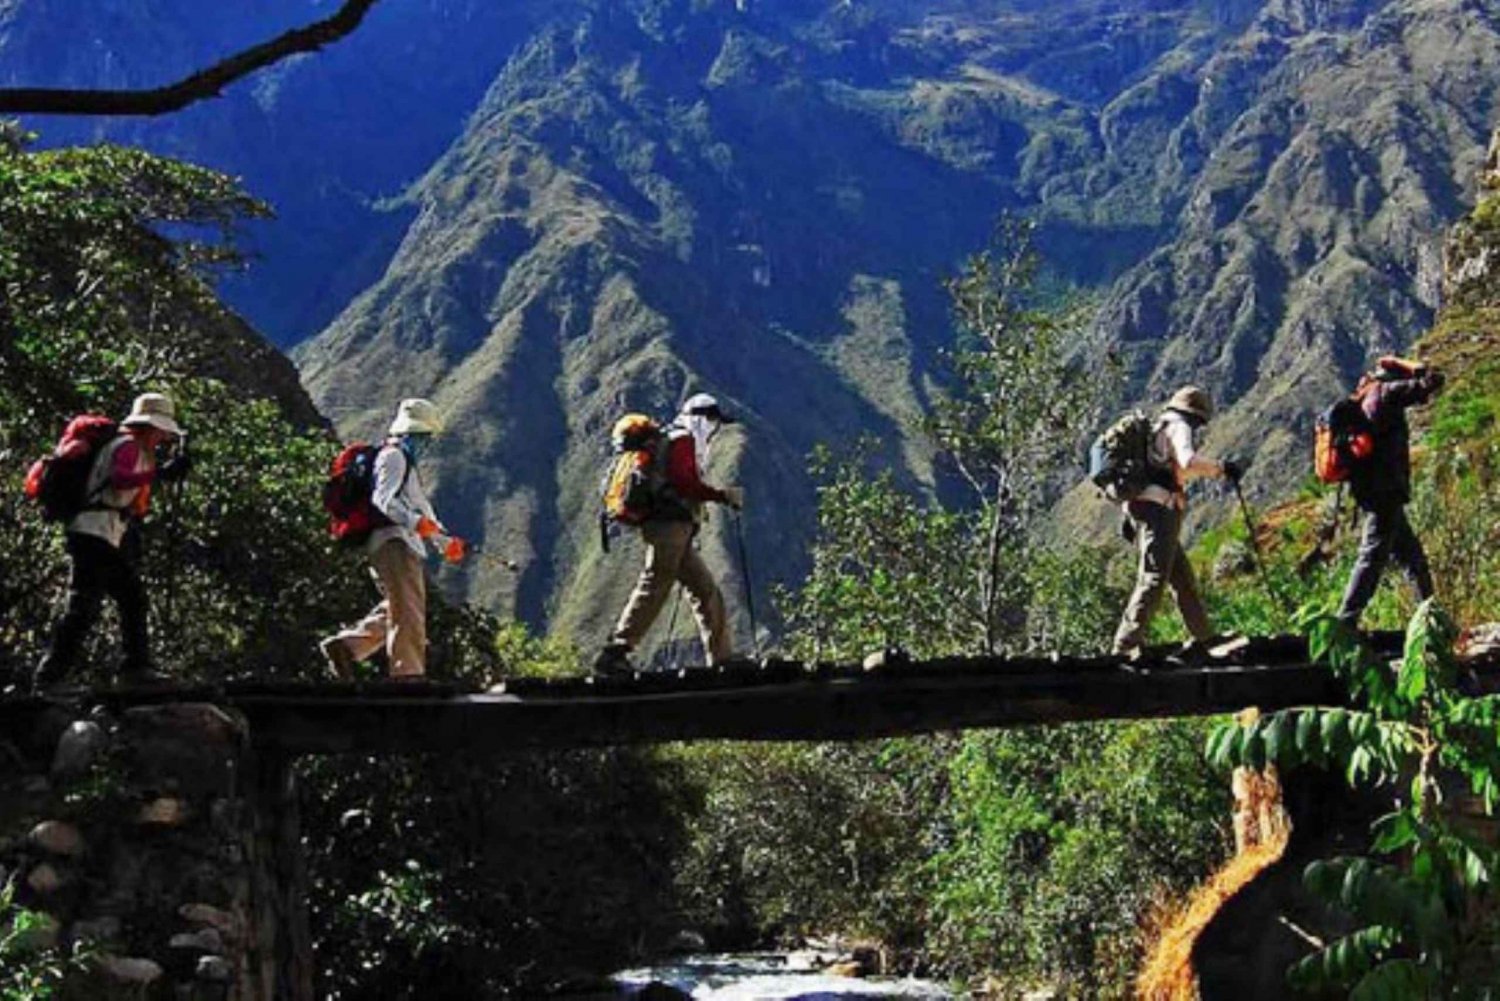 From Cusco: Inca Trail 4 days 3 nights to Machu Picchu